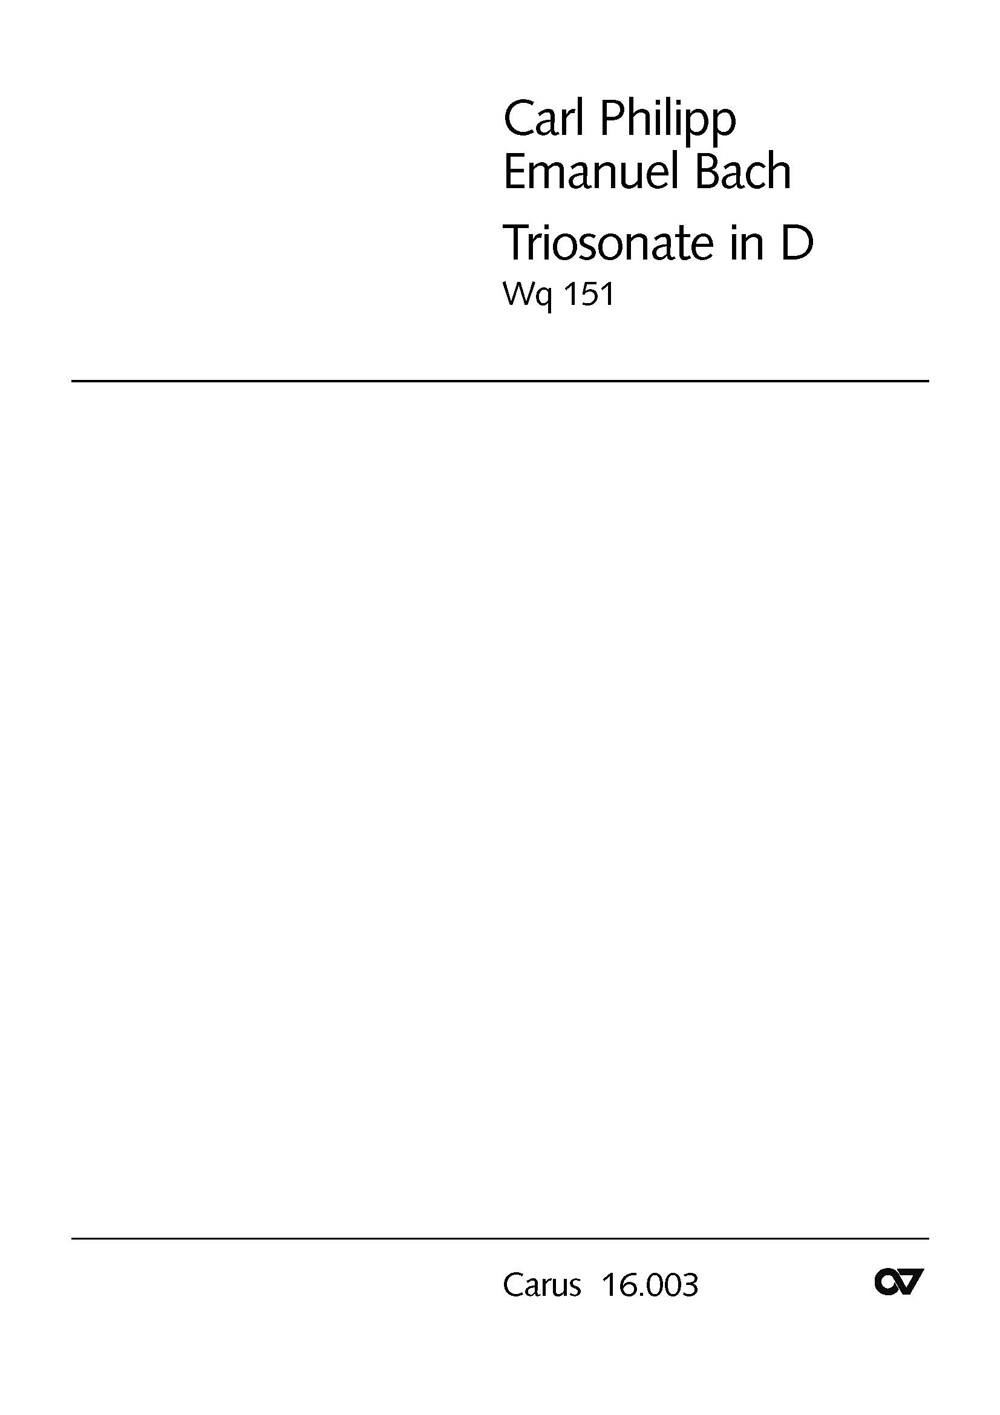 Triosonate In D (BACH CARL PHILIPP EMMANUEL)